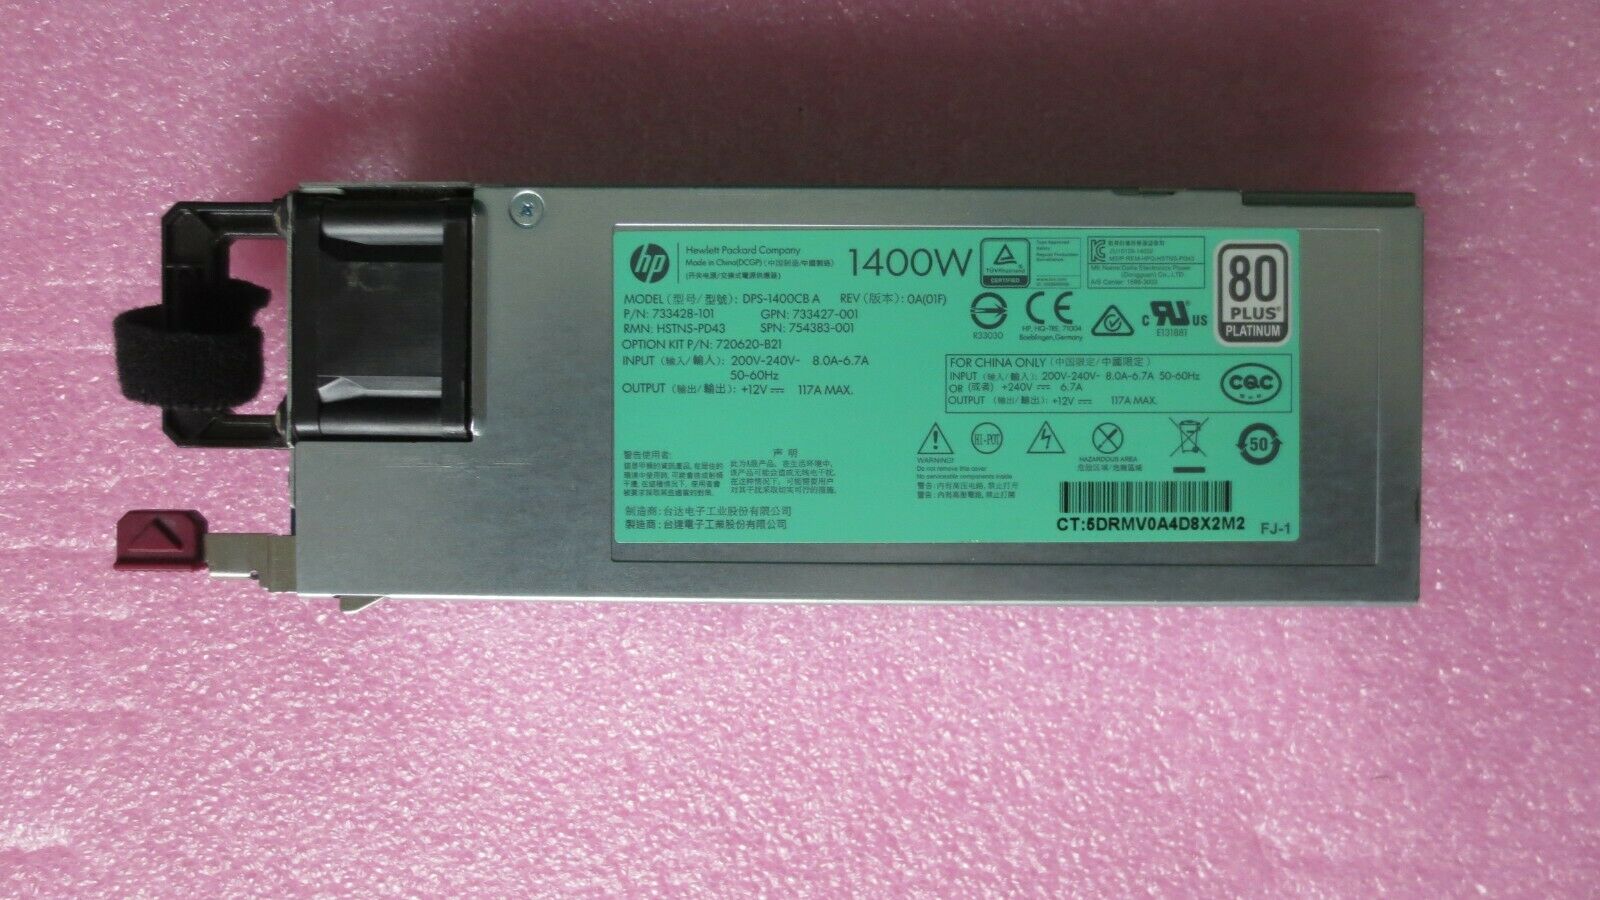 HP 1400W Flex G9 Power Supply DPS-1400CB A HSTNS-PD43 Platinum Plus